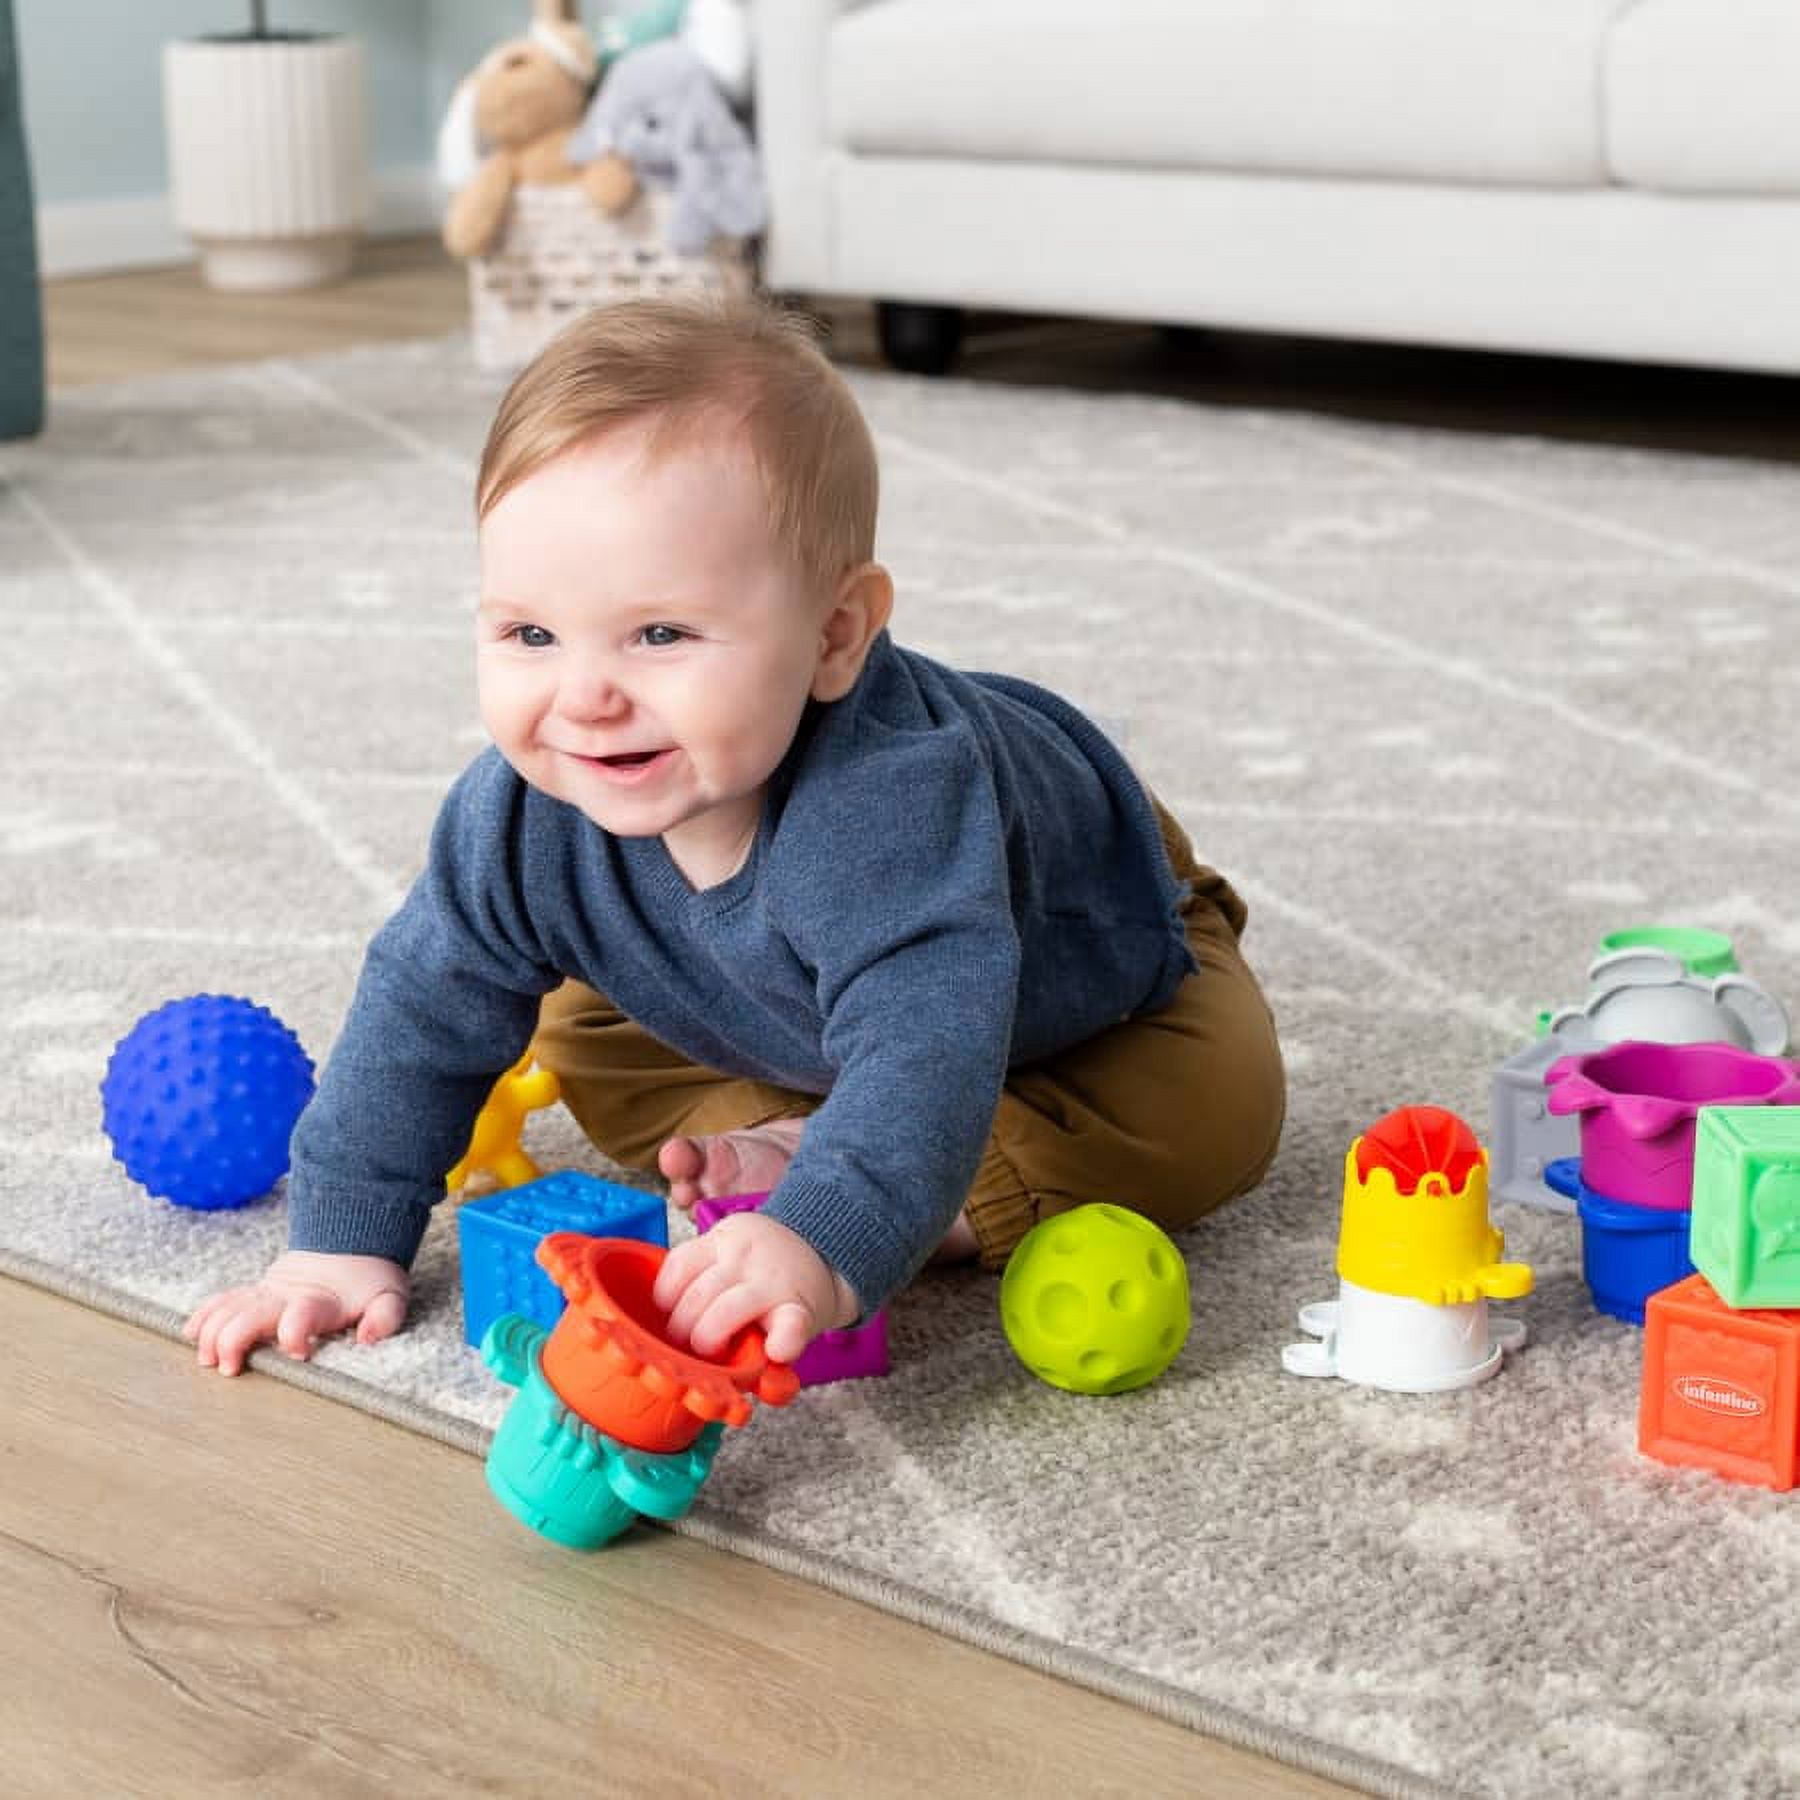 Infantino Sensory Balls, Blocks & Cups Activity Set for Babies, 6-12 Months, Multicolor, 16-Piece Set - image 5 of 7